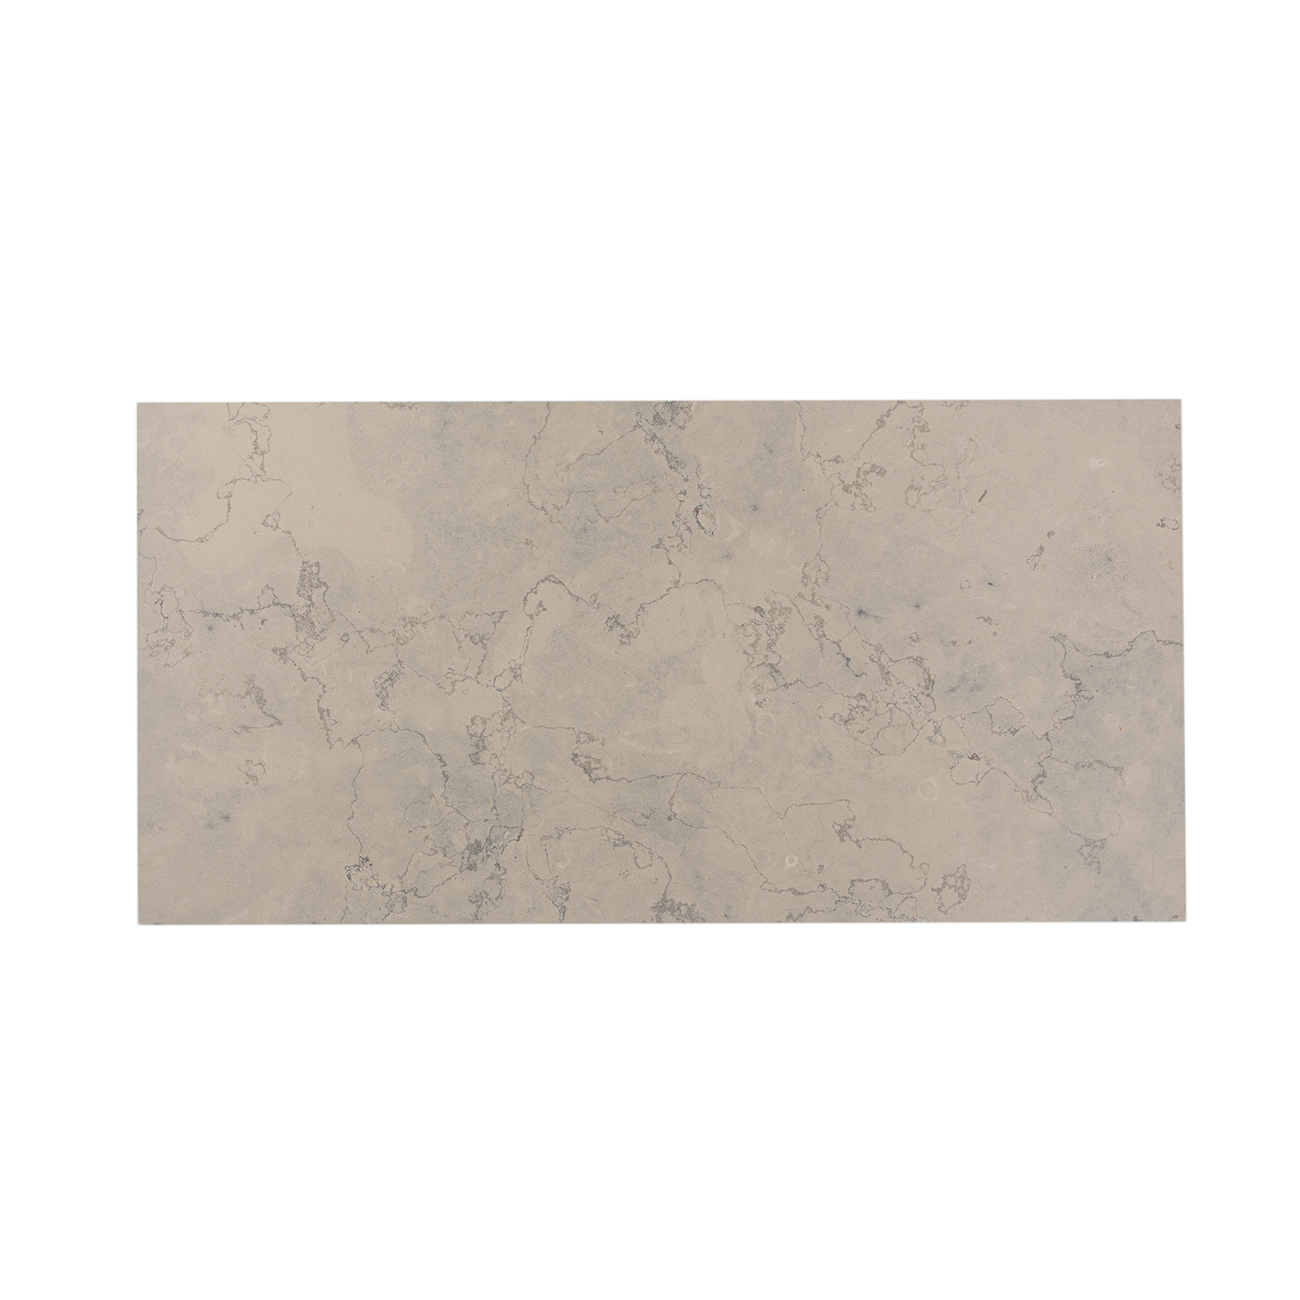 haussmann london grey limestone rectangle natural stone field tile 12x24 honed